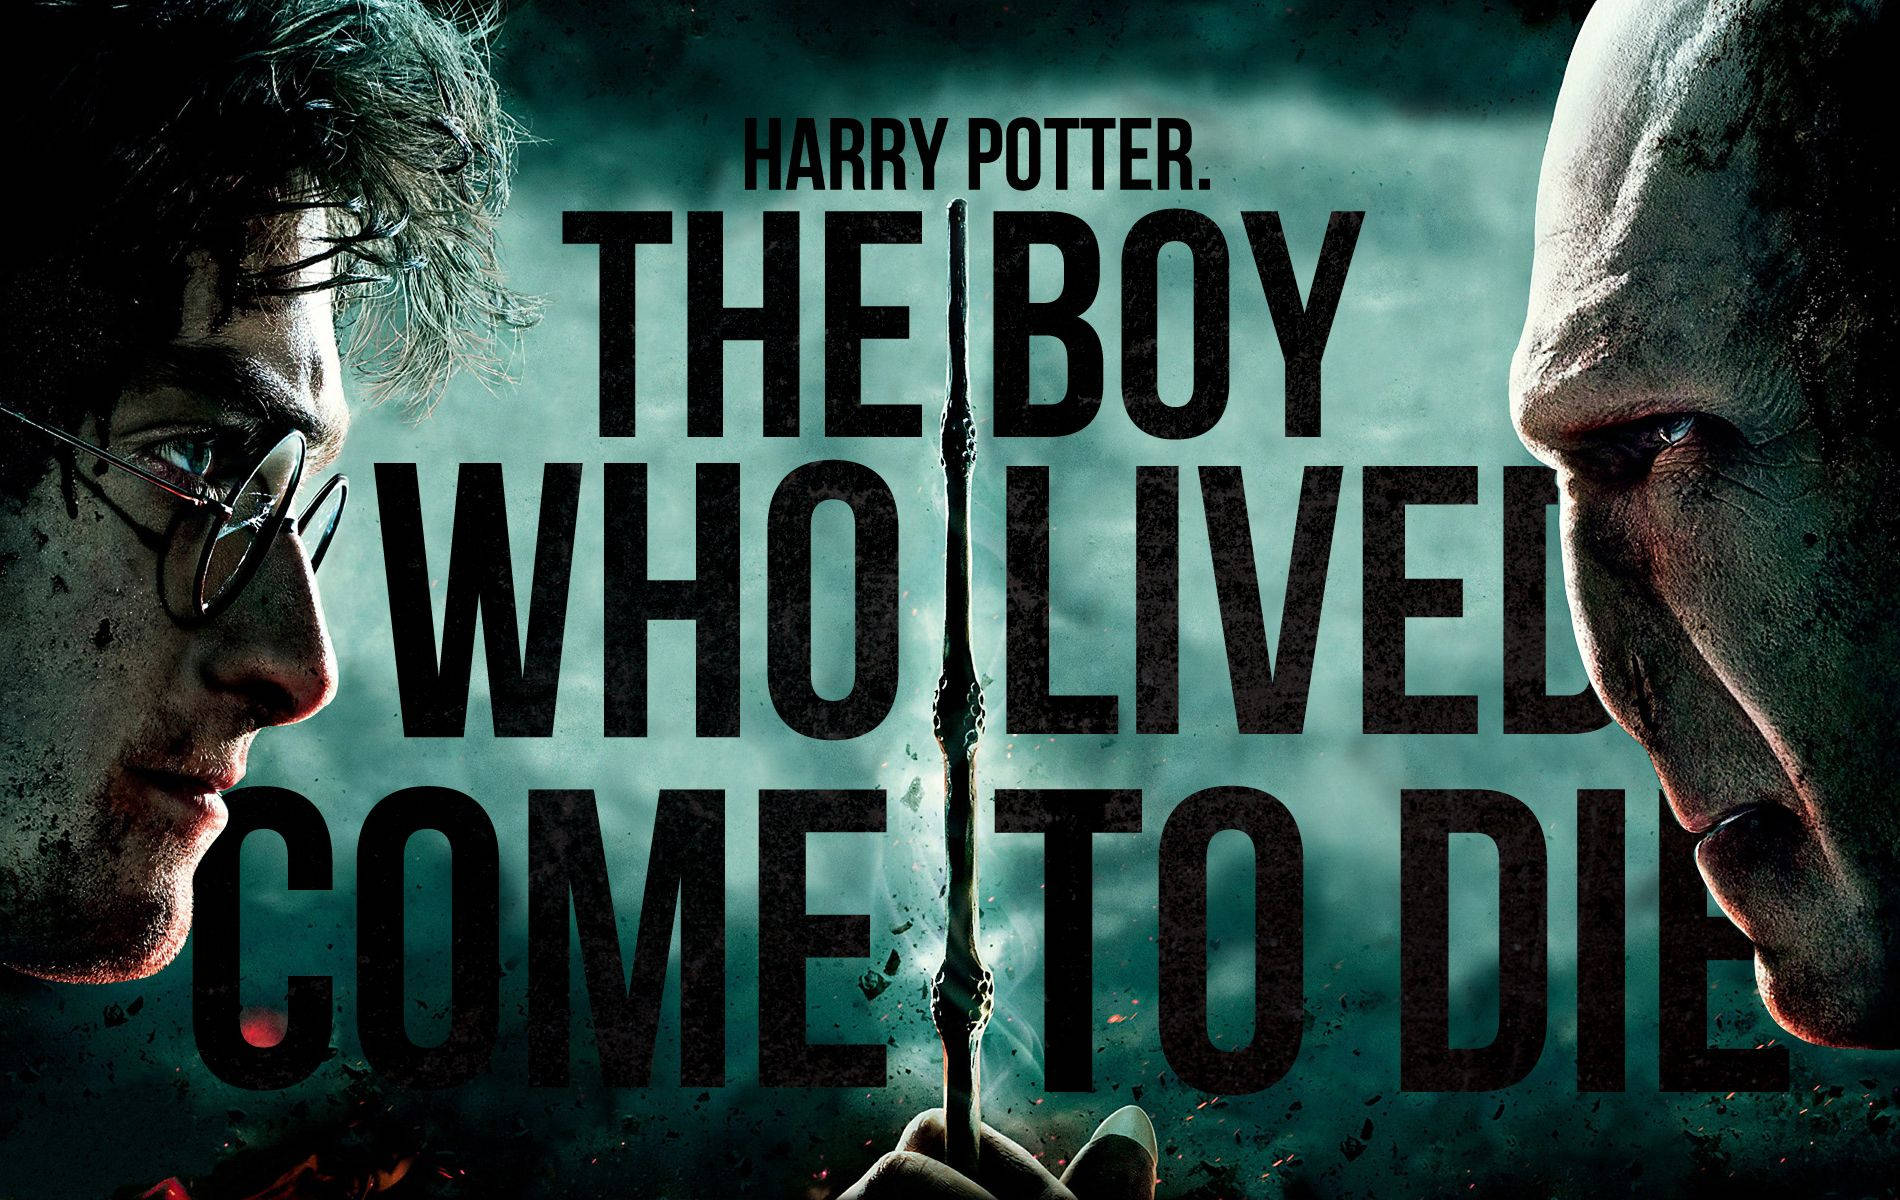 Harry Potter Vs. Voldemort Aesthetic